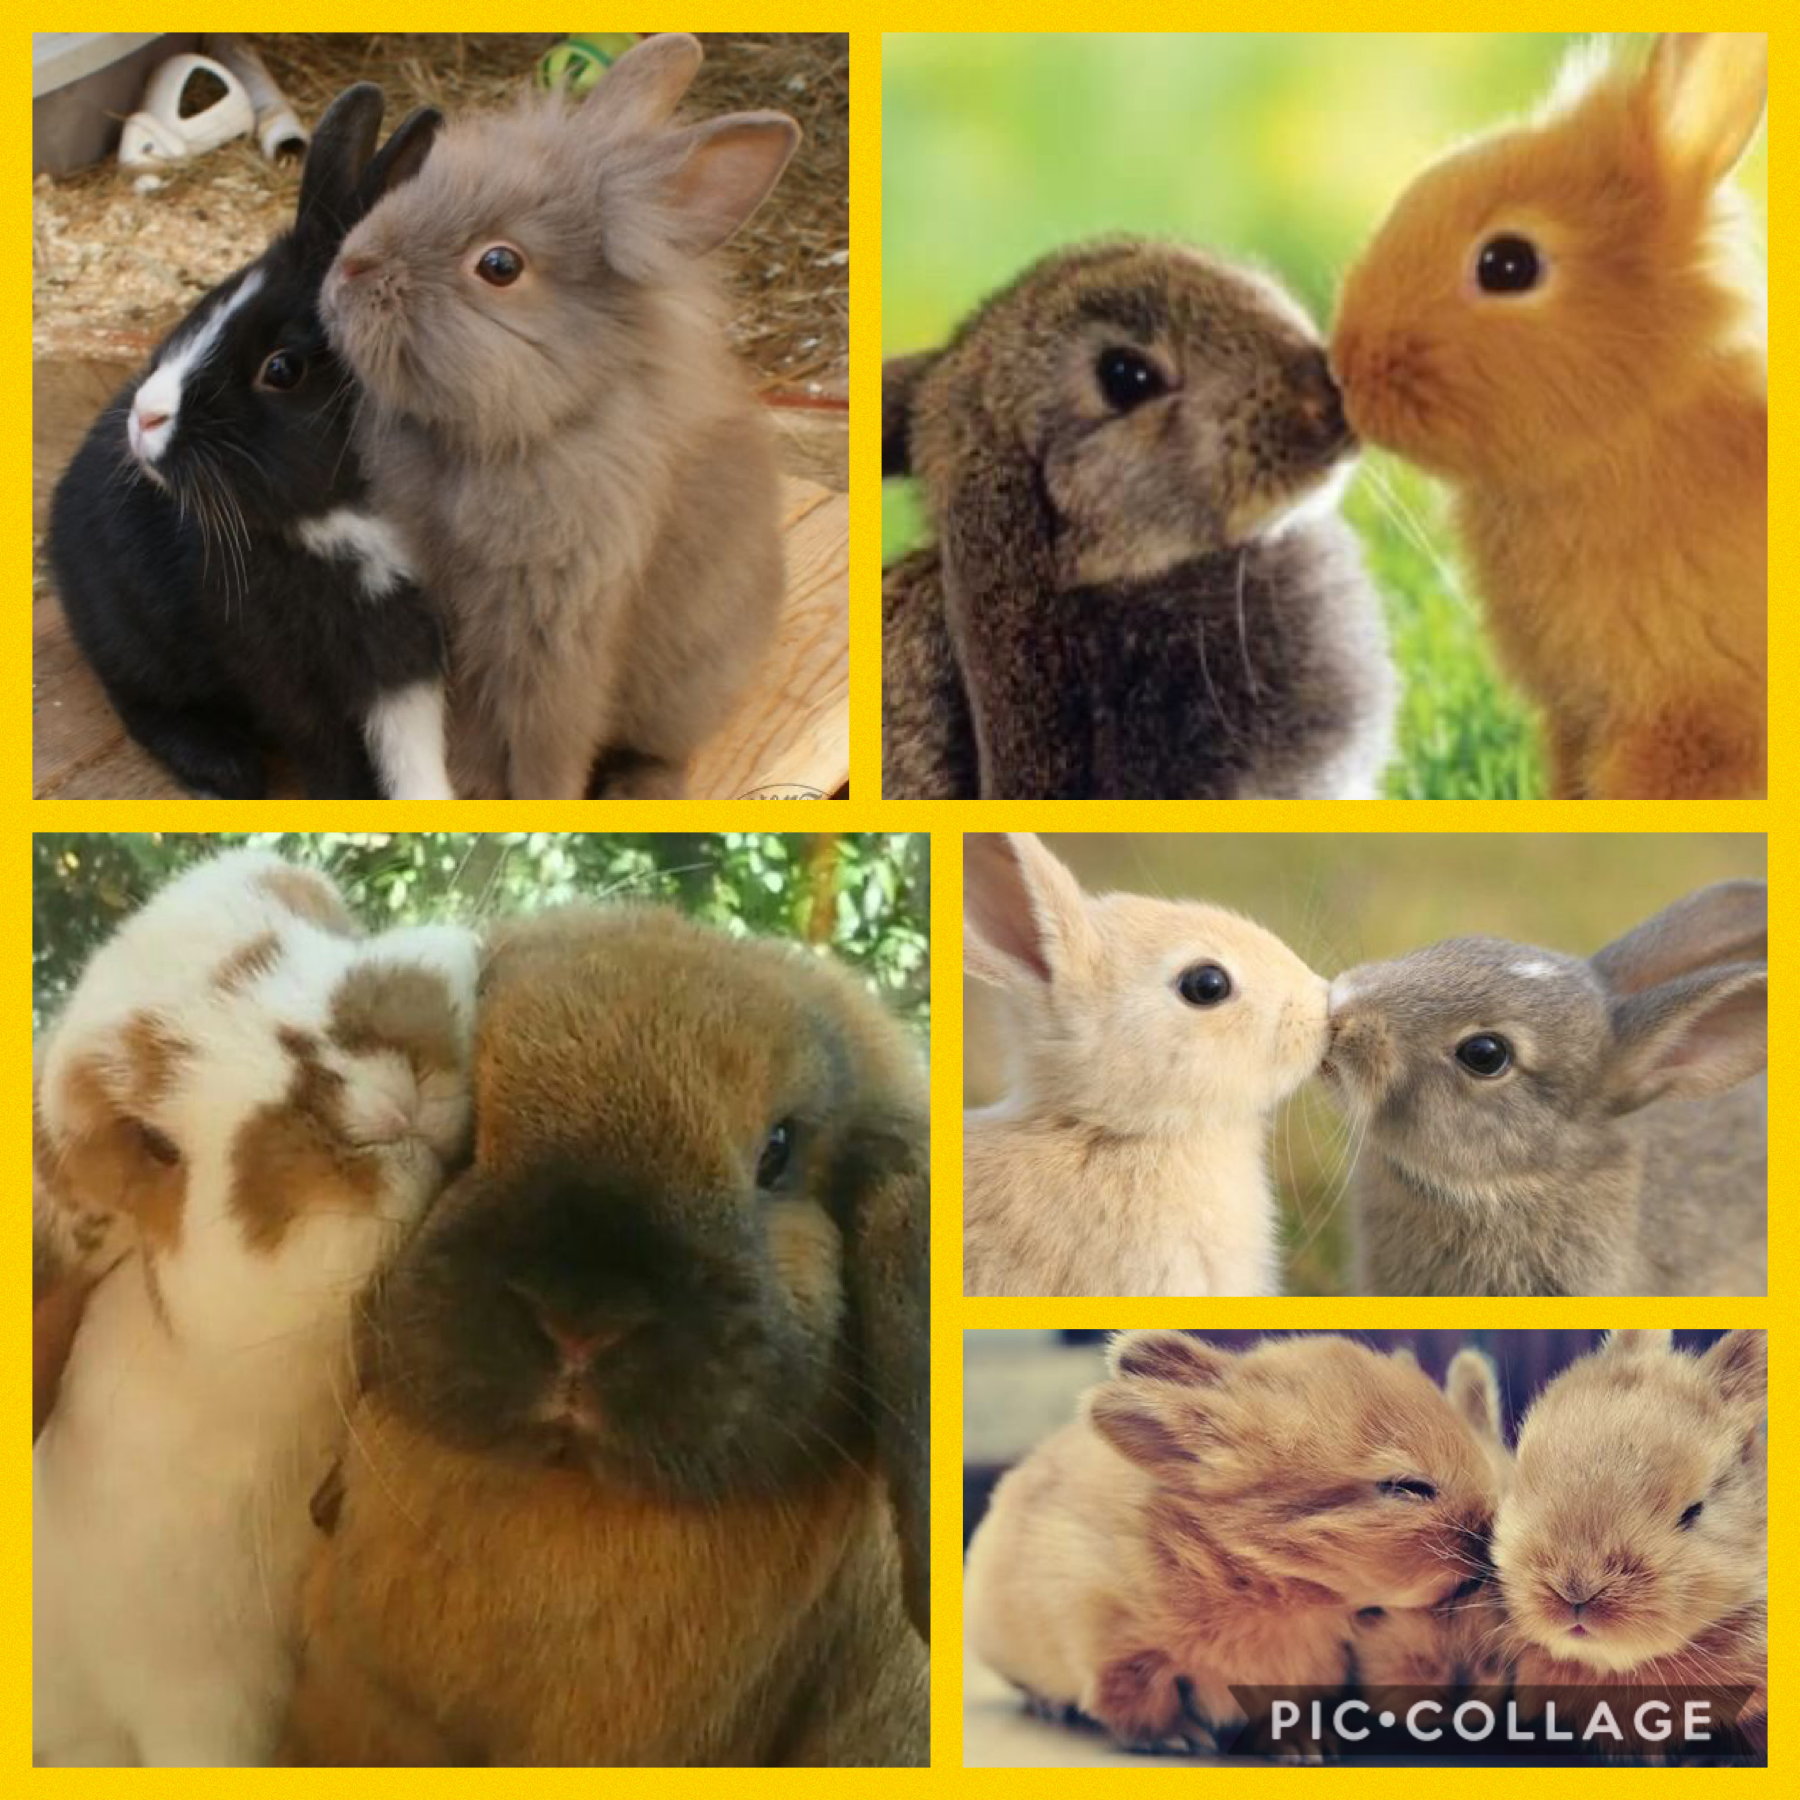 Love between rabbits. It’s so cute 💕 